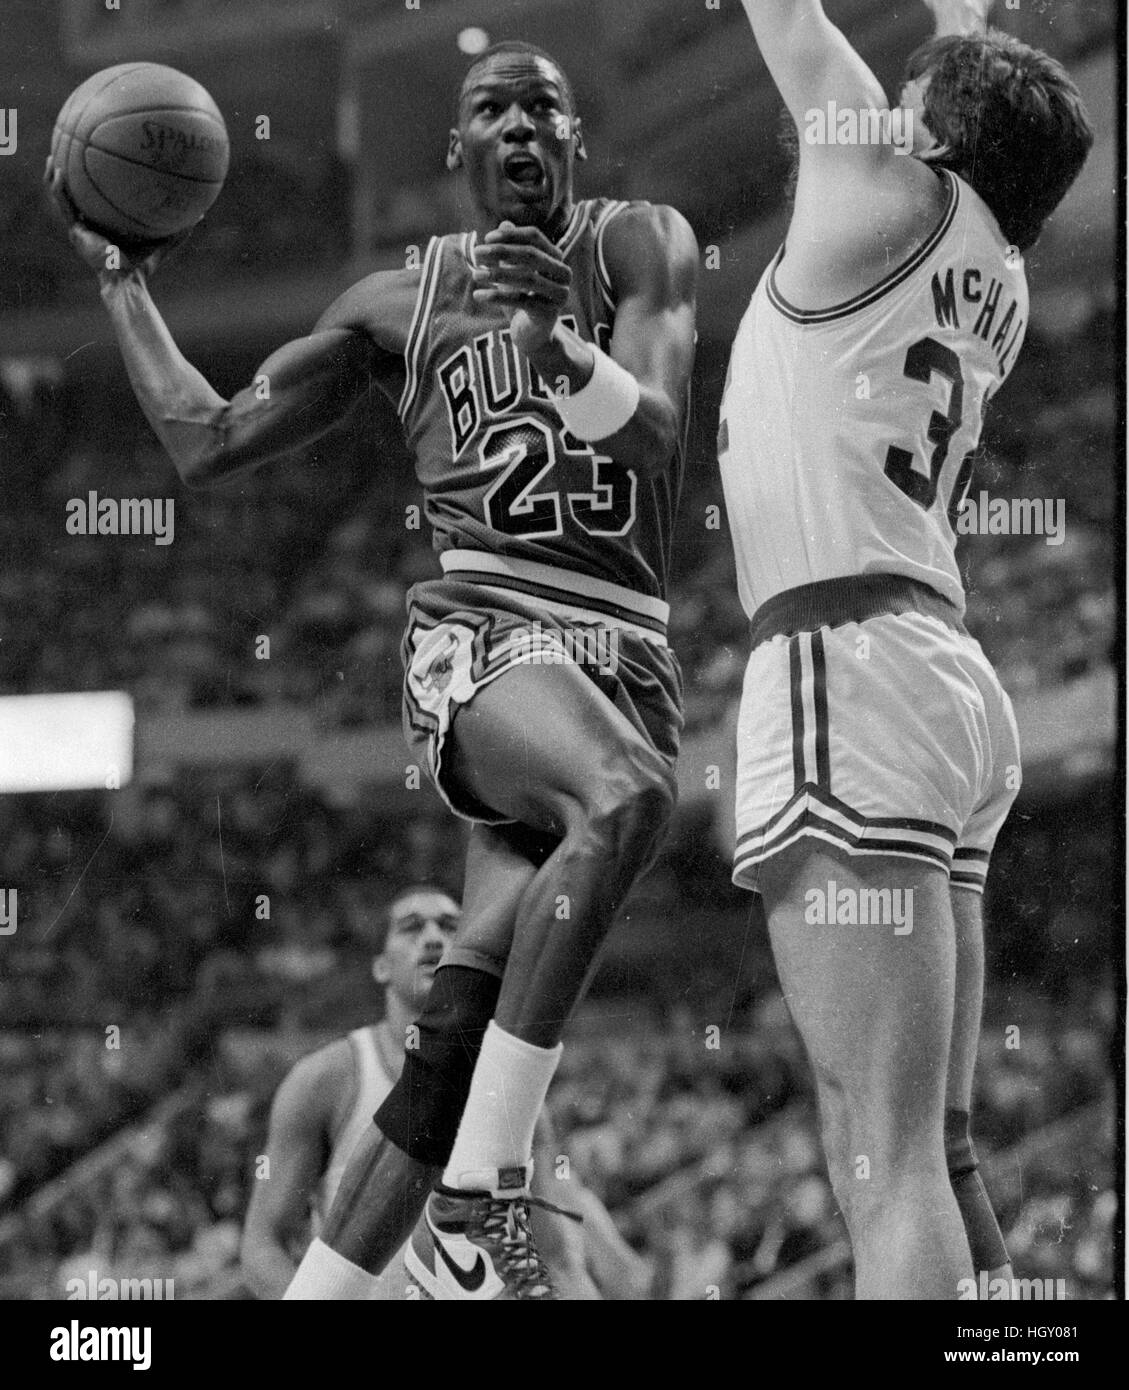 Chicago Bulls Michael Jordan scores on Boston Celtics Kevin McHale in game action at the Boston garden in Boston Mass photo by bill belknap Stock Photo